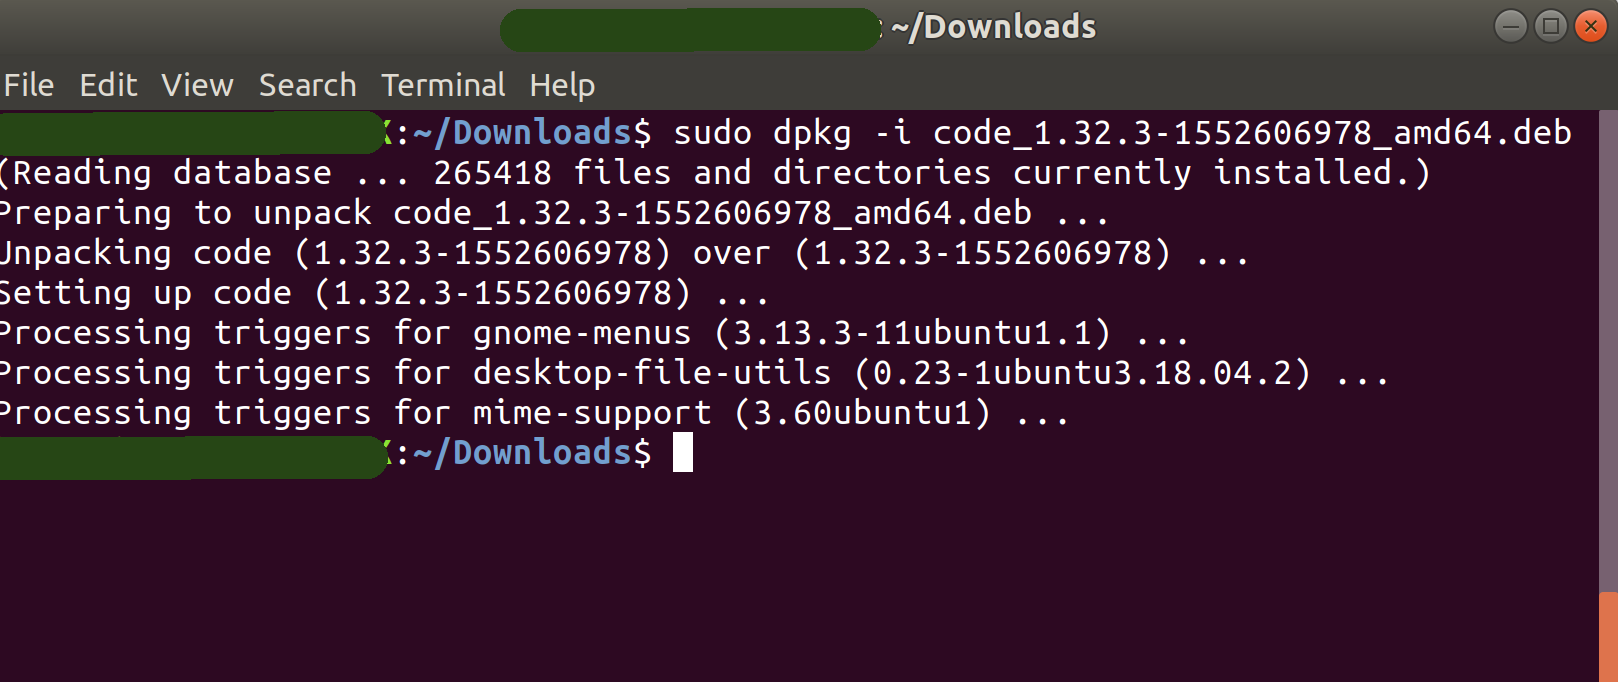 Install Visual Studio Code on Ubuntu